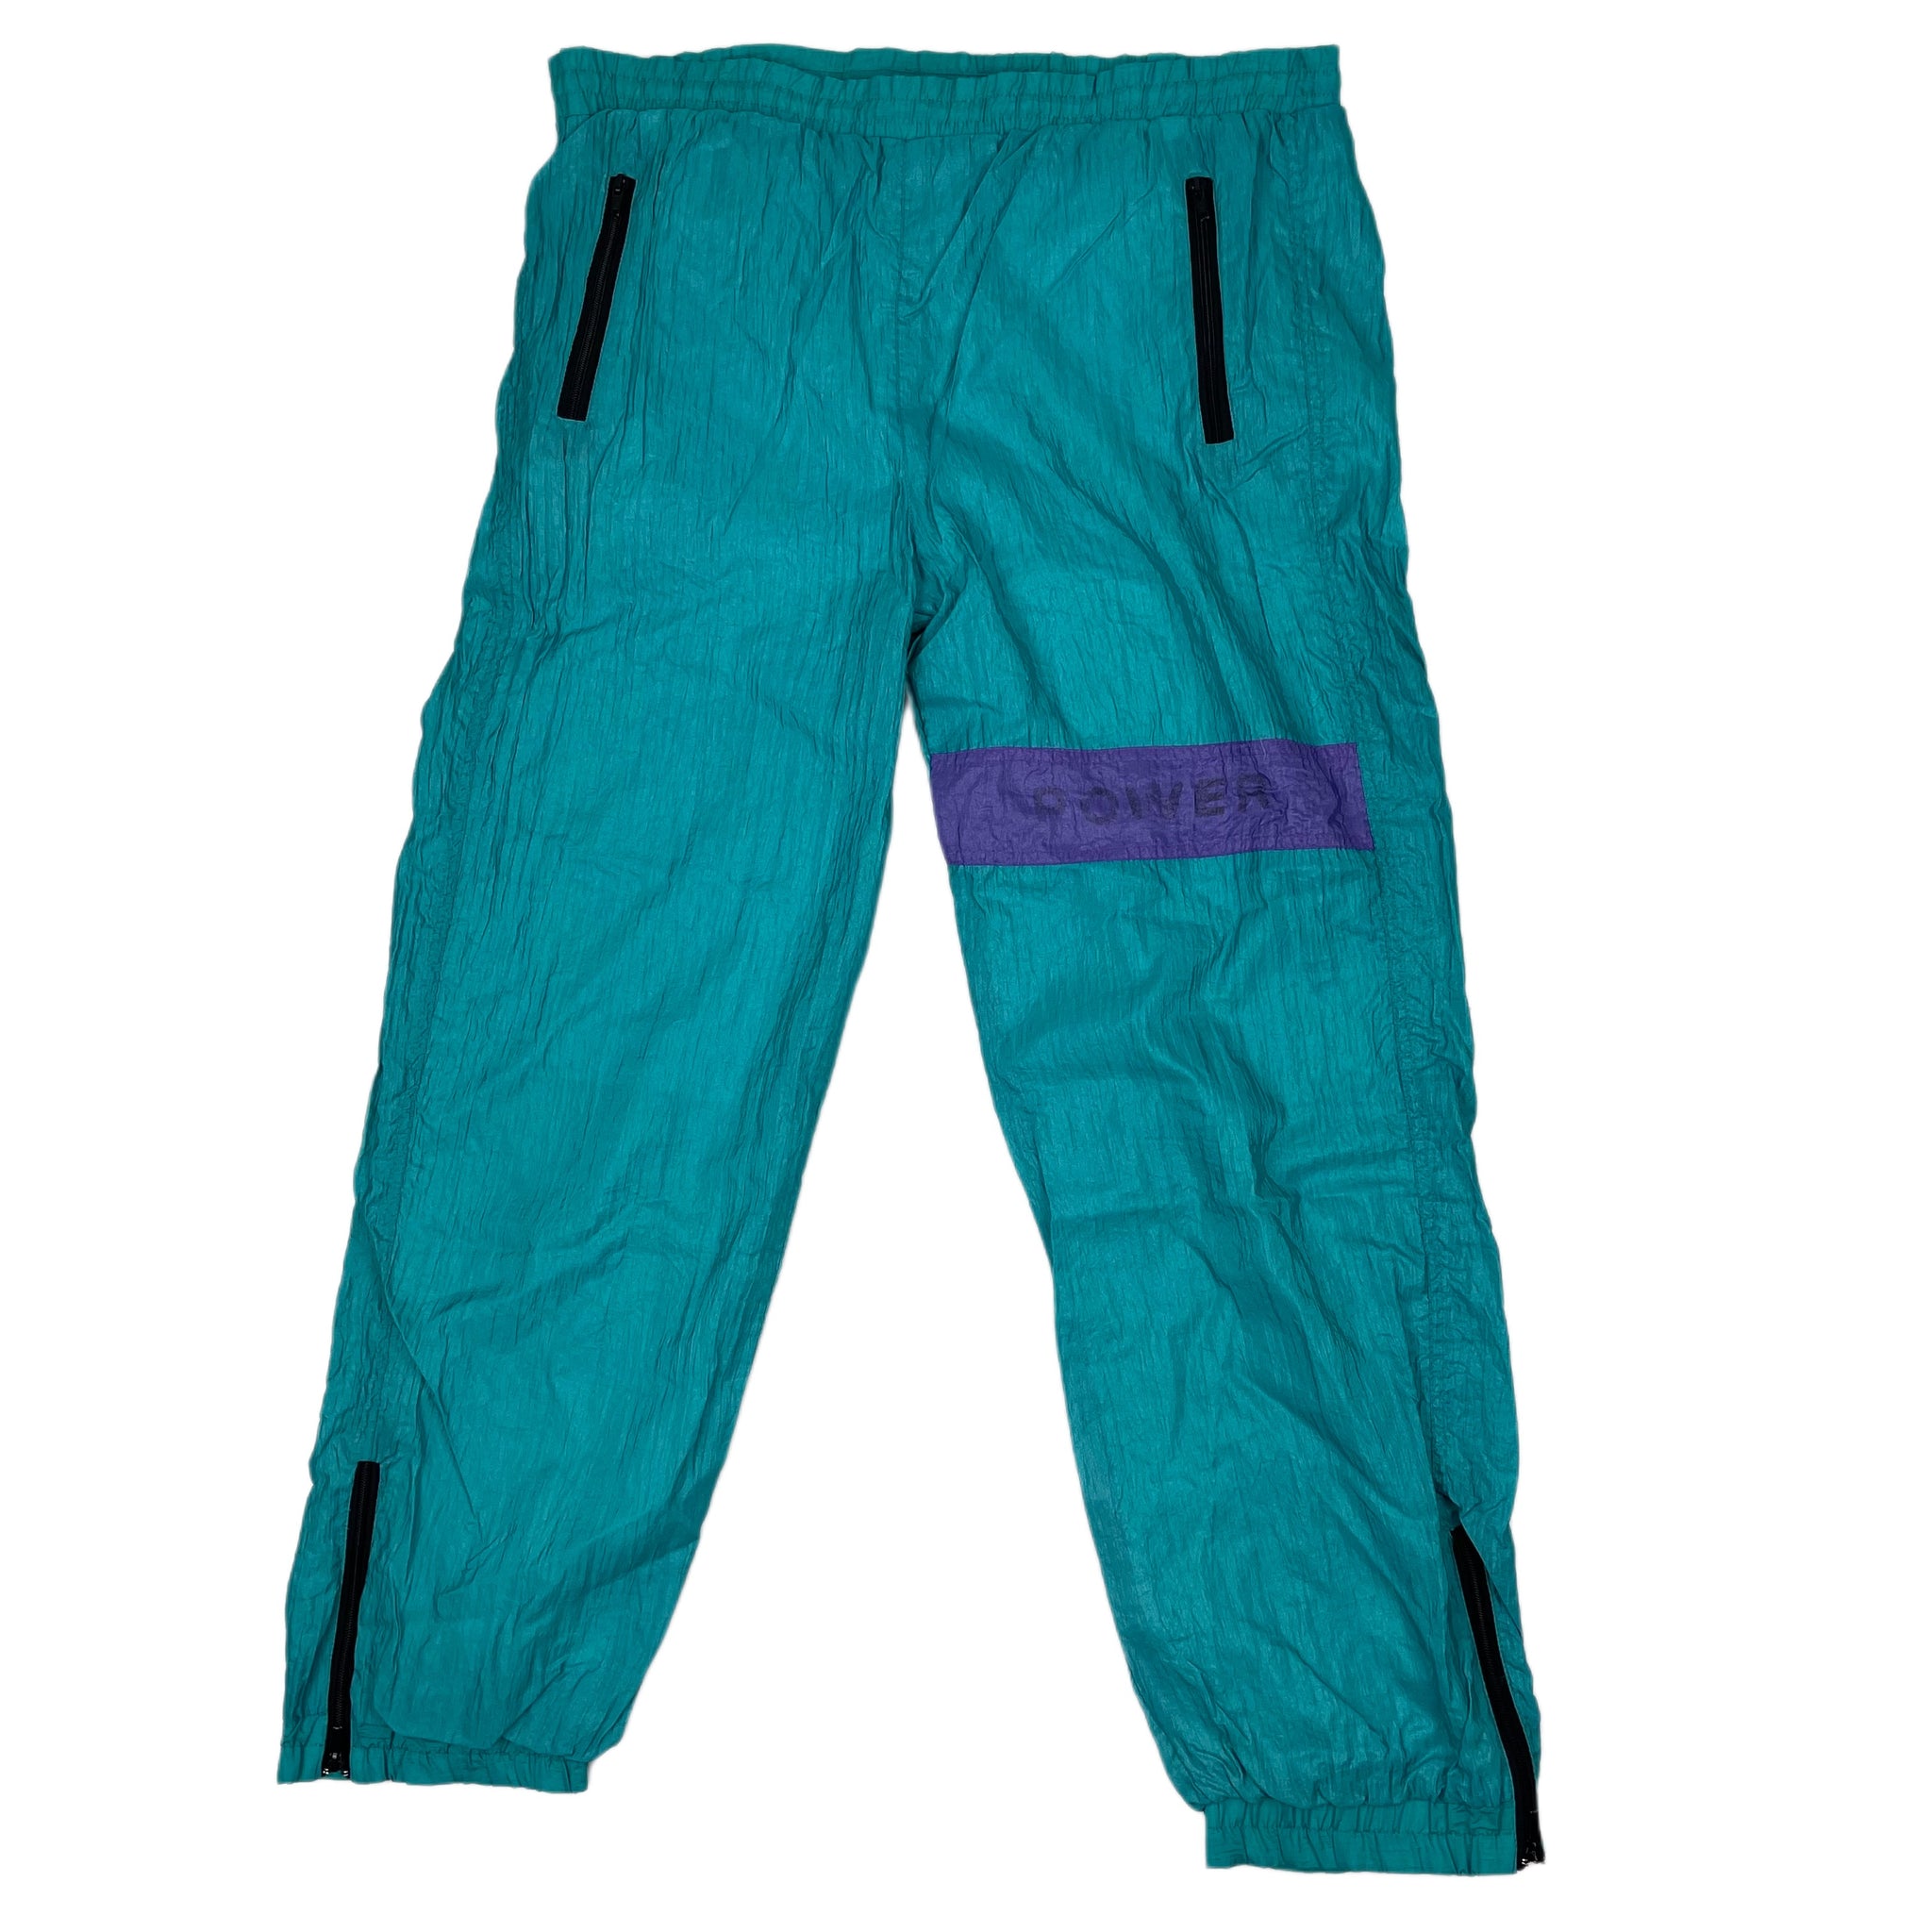 Vintage Turquoise Track Pants - XL